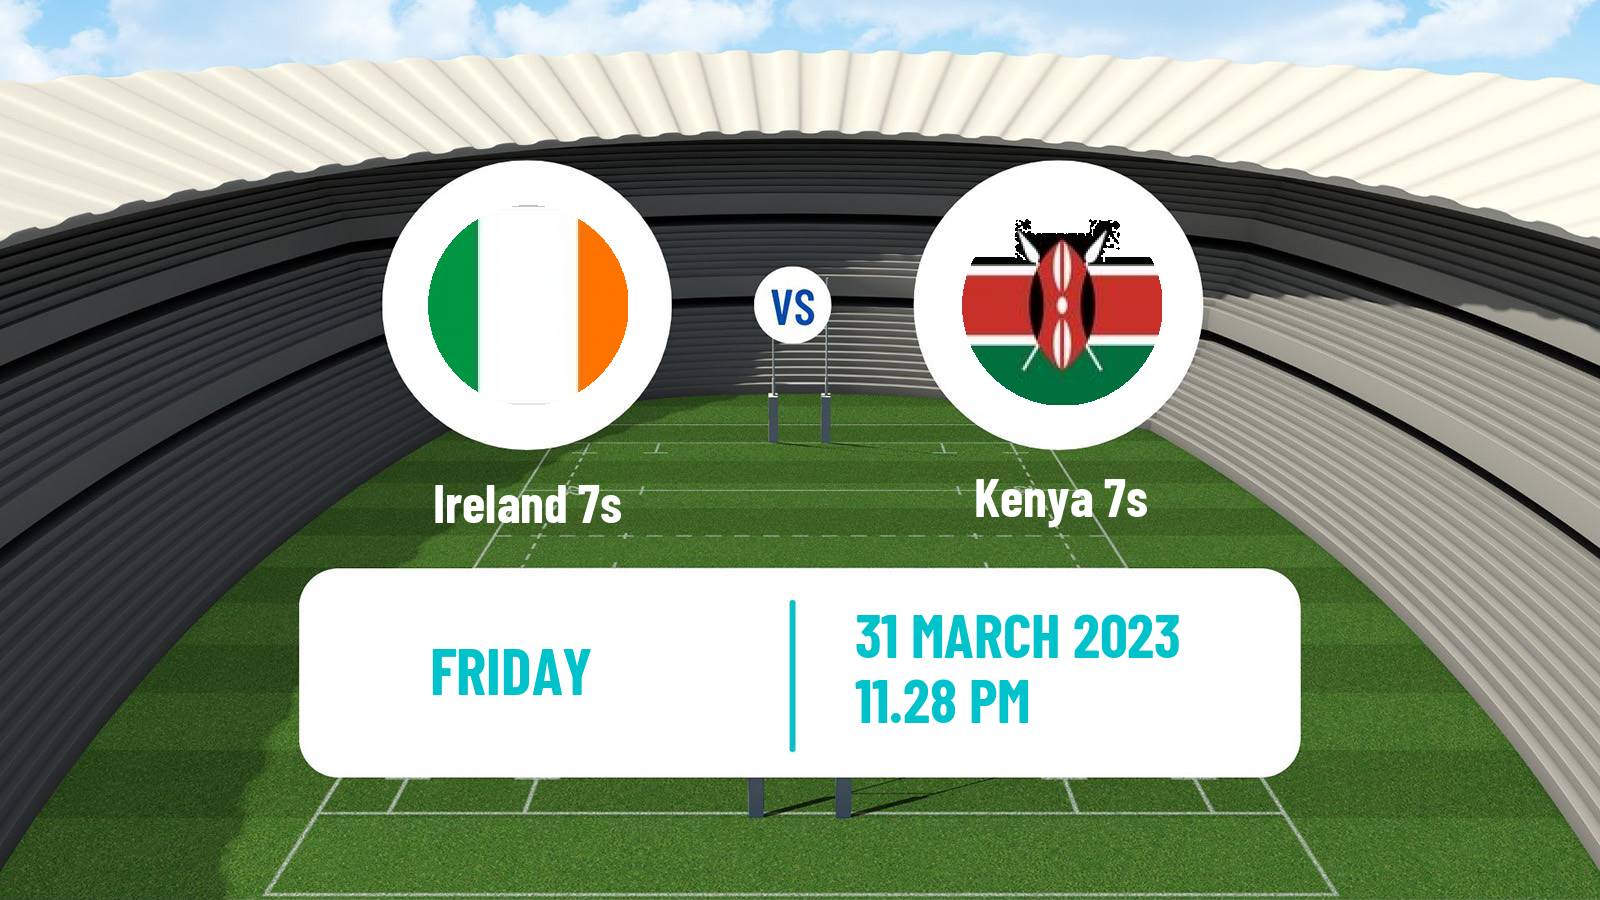 Rugby union Sevens World Series - Hong Kong 2 Ireland 7s - Kenya 7s